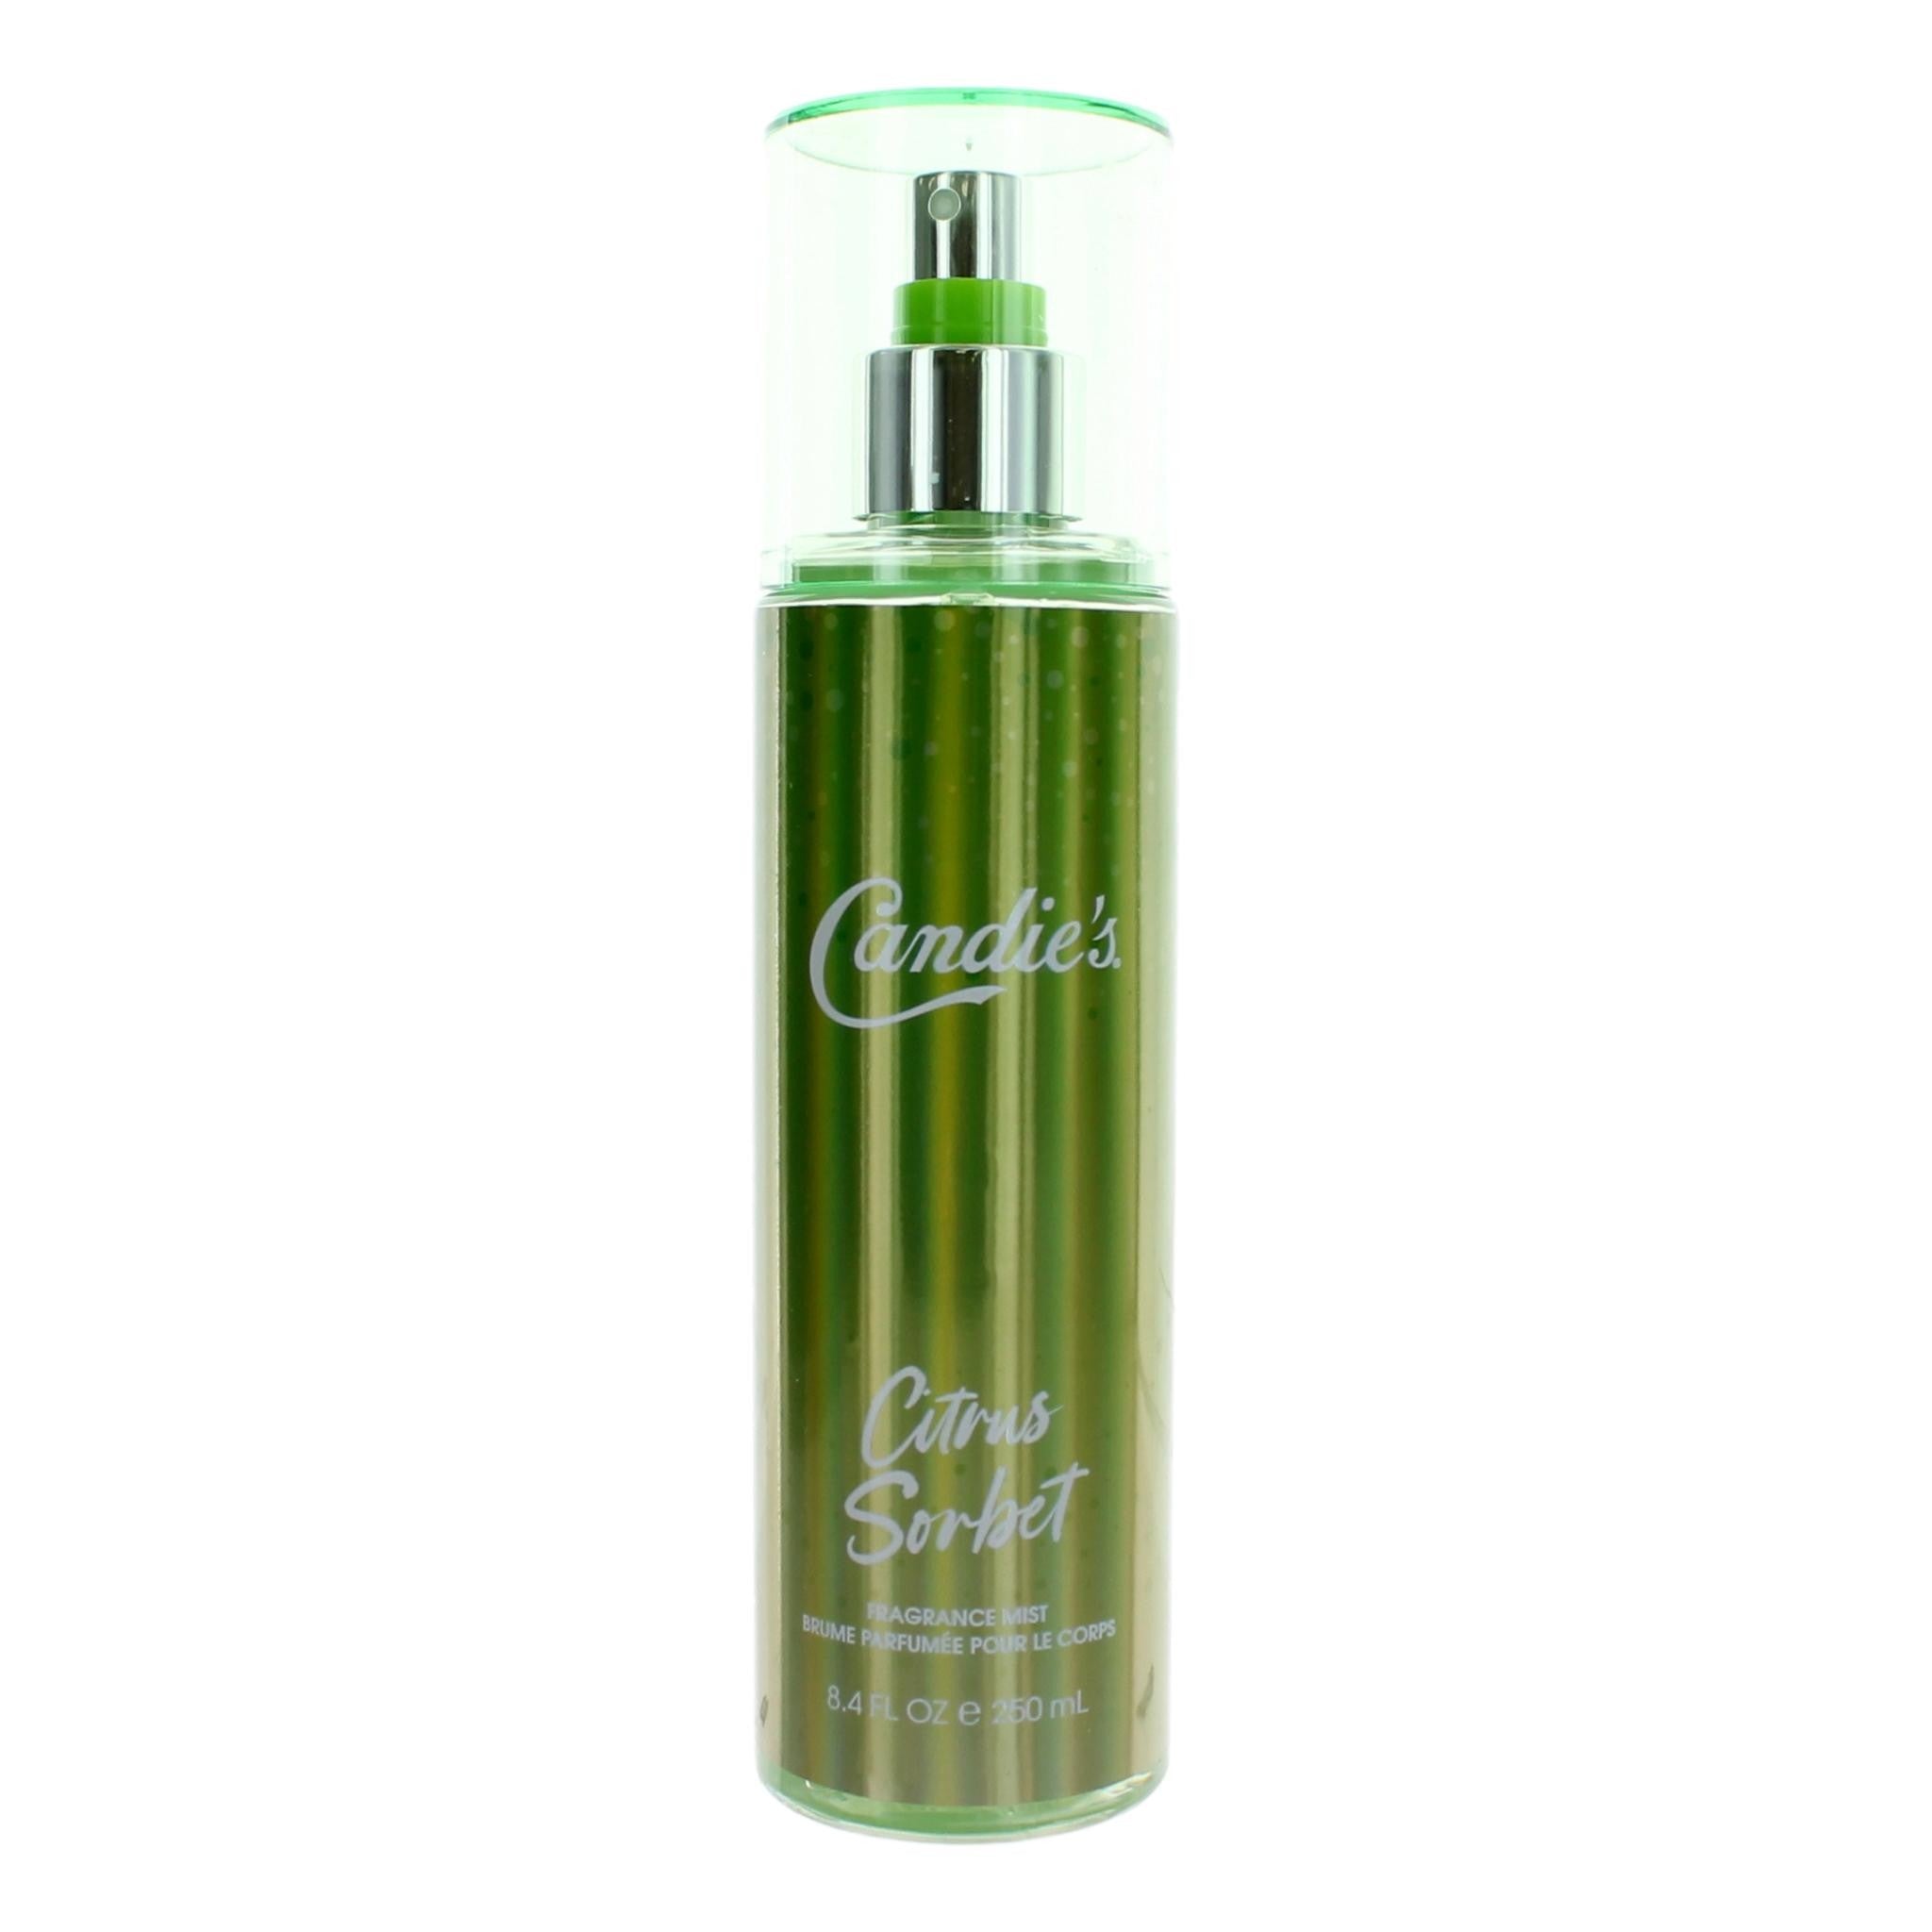 Bottle of Citrus Sorbet by Candie's, 8.4 oz Fragrance Mist for Women